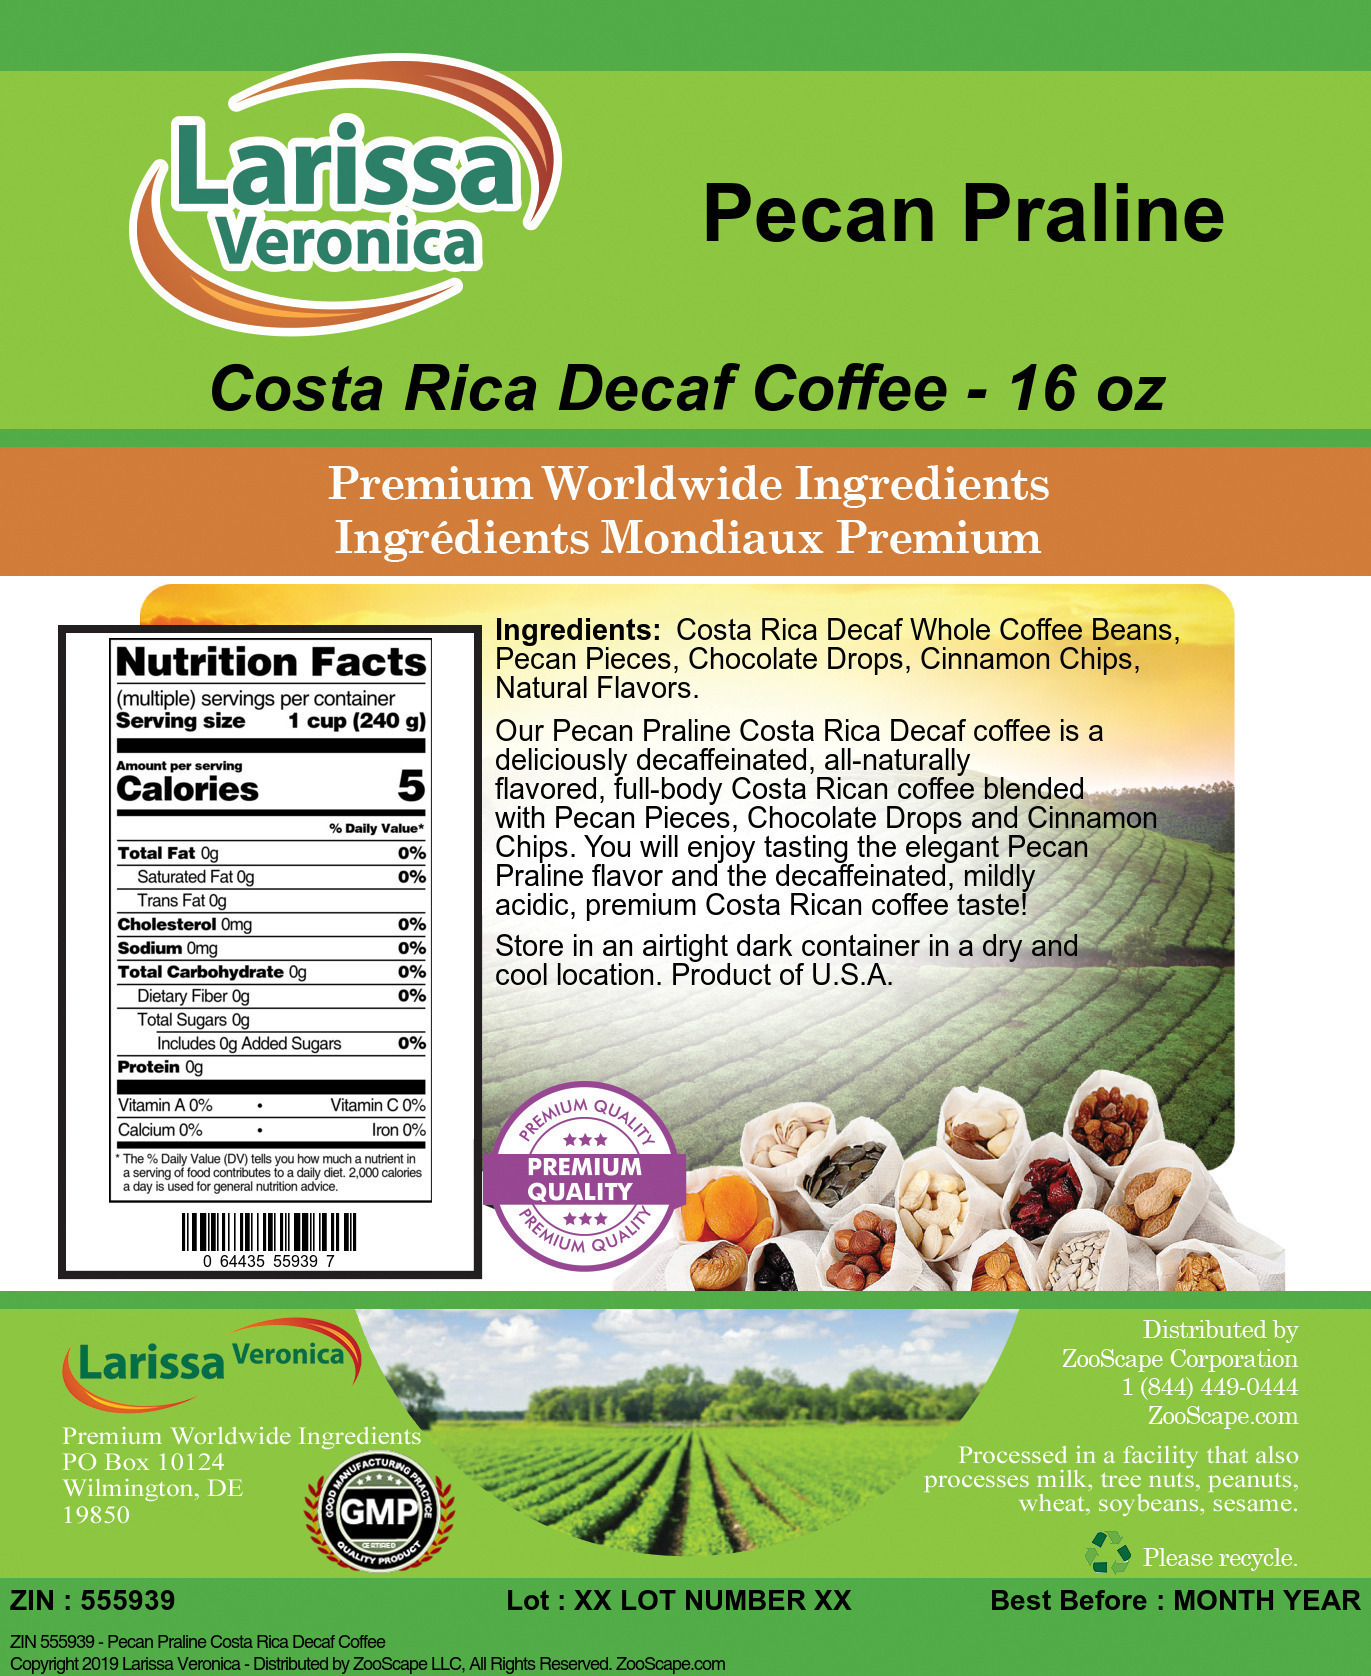 Pecan Praline Costa Rica Decaf Coffee - Label